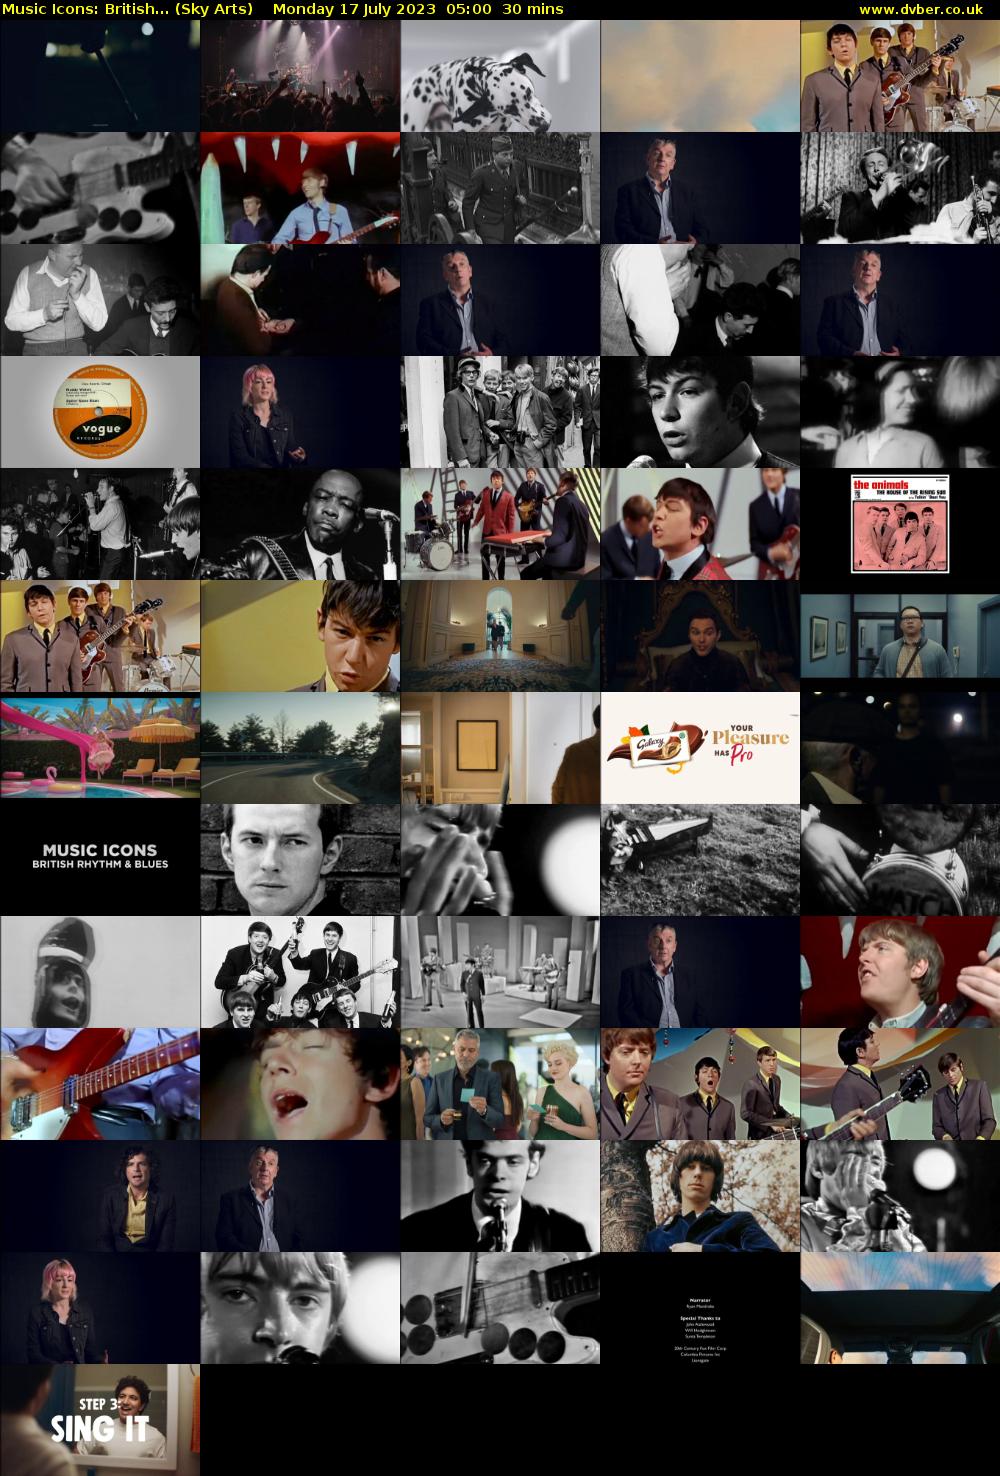 Music Icons: British... (Sky Arts) Monday 17 July 2023 05:00 - 05:30